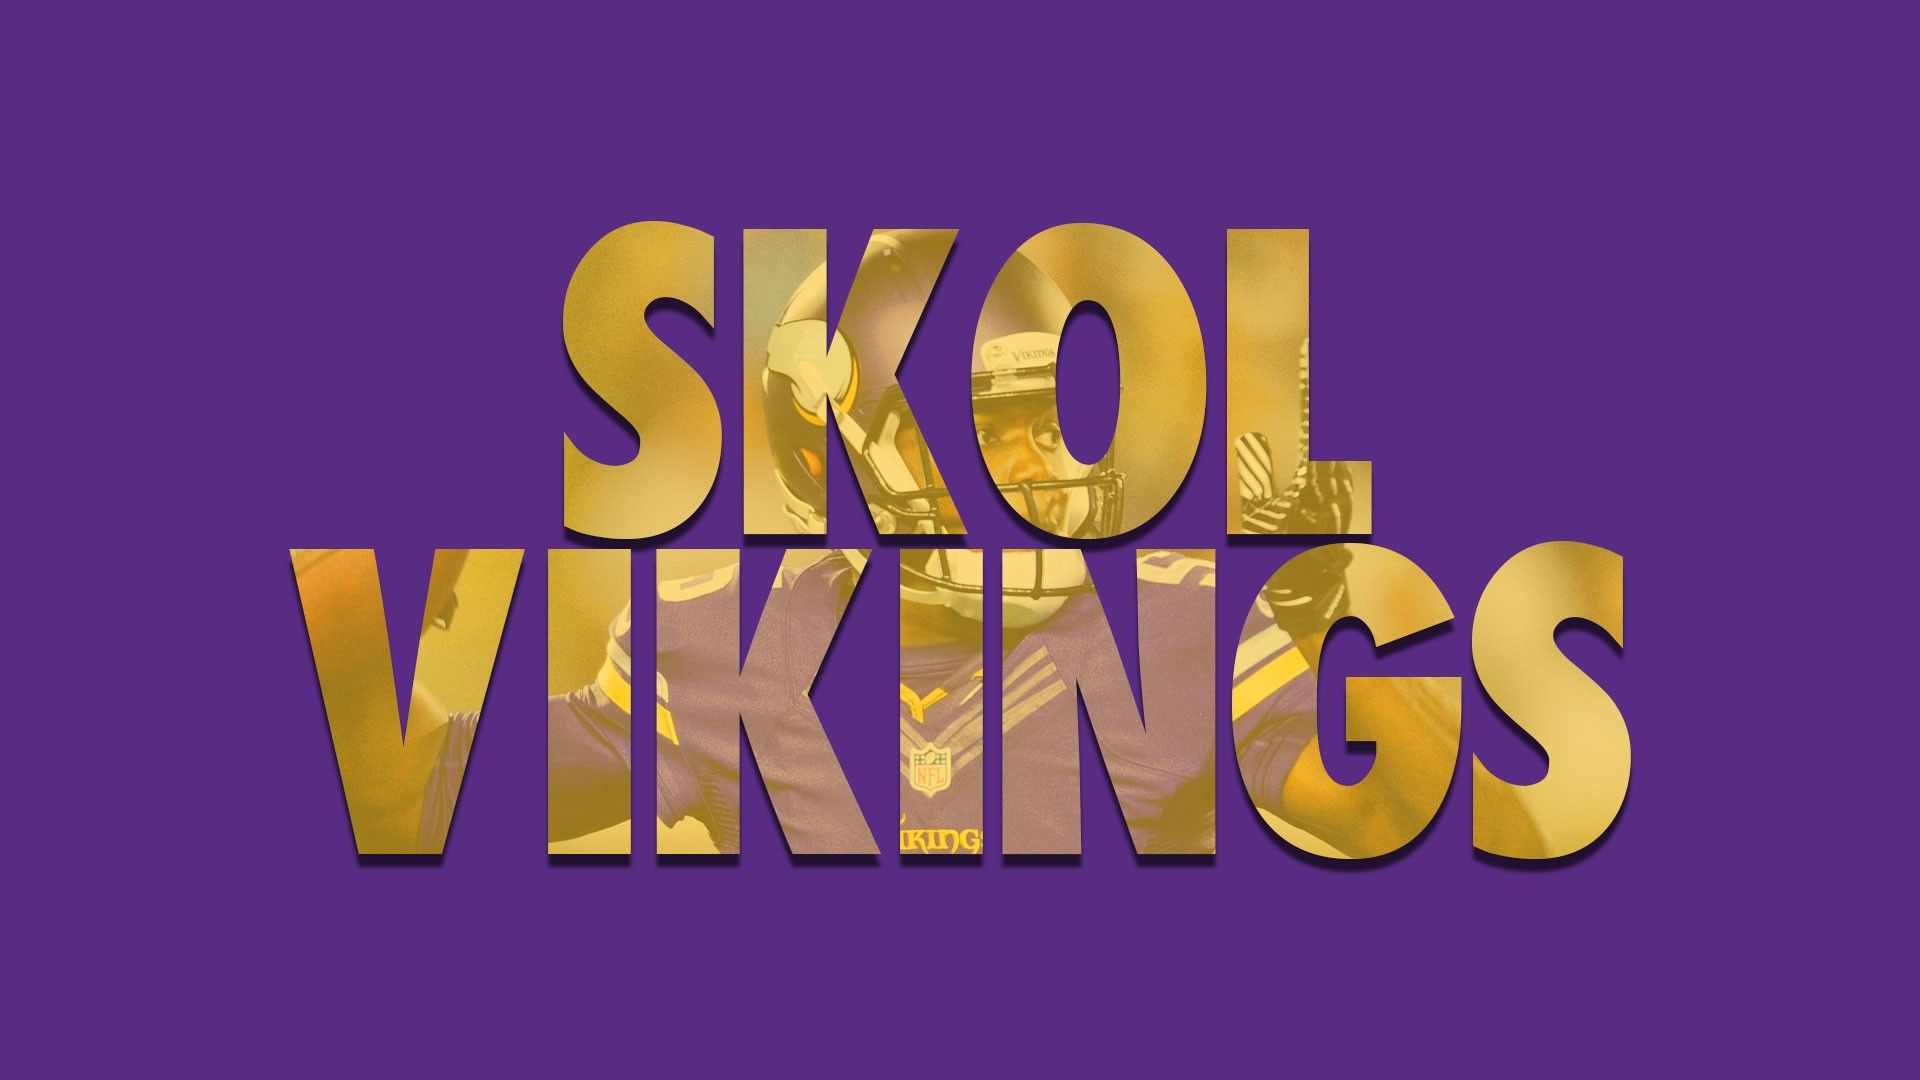 Minnesota Vikings picture wallpaper